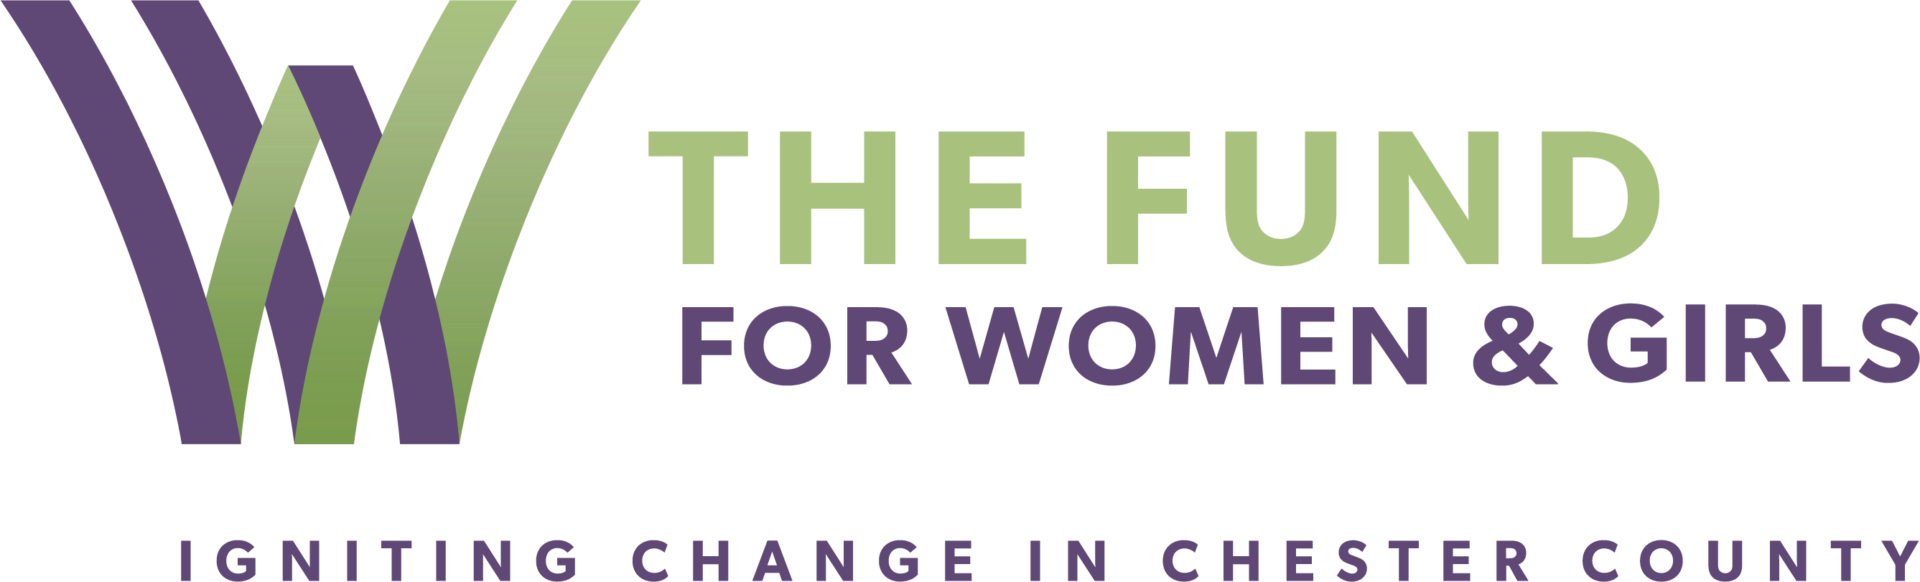 The Fund logo w tagline transparent